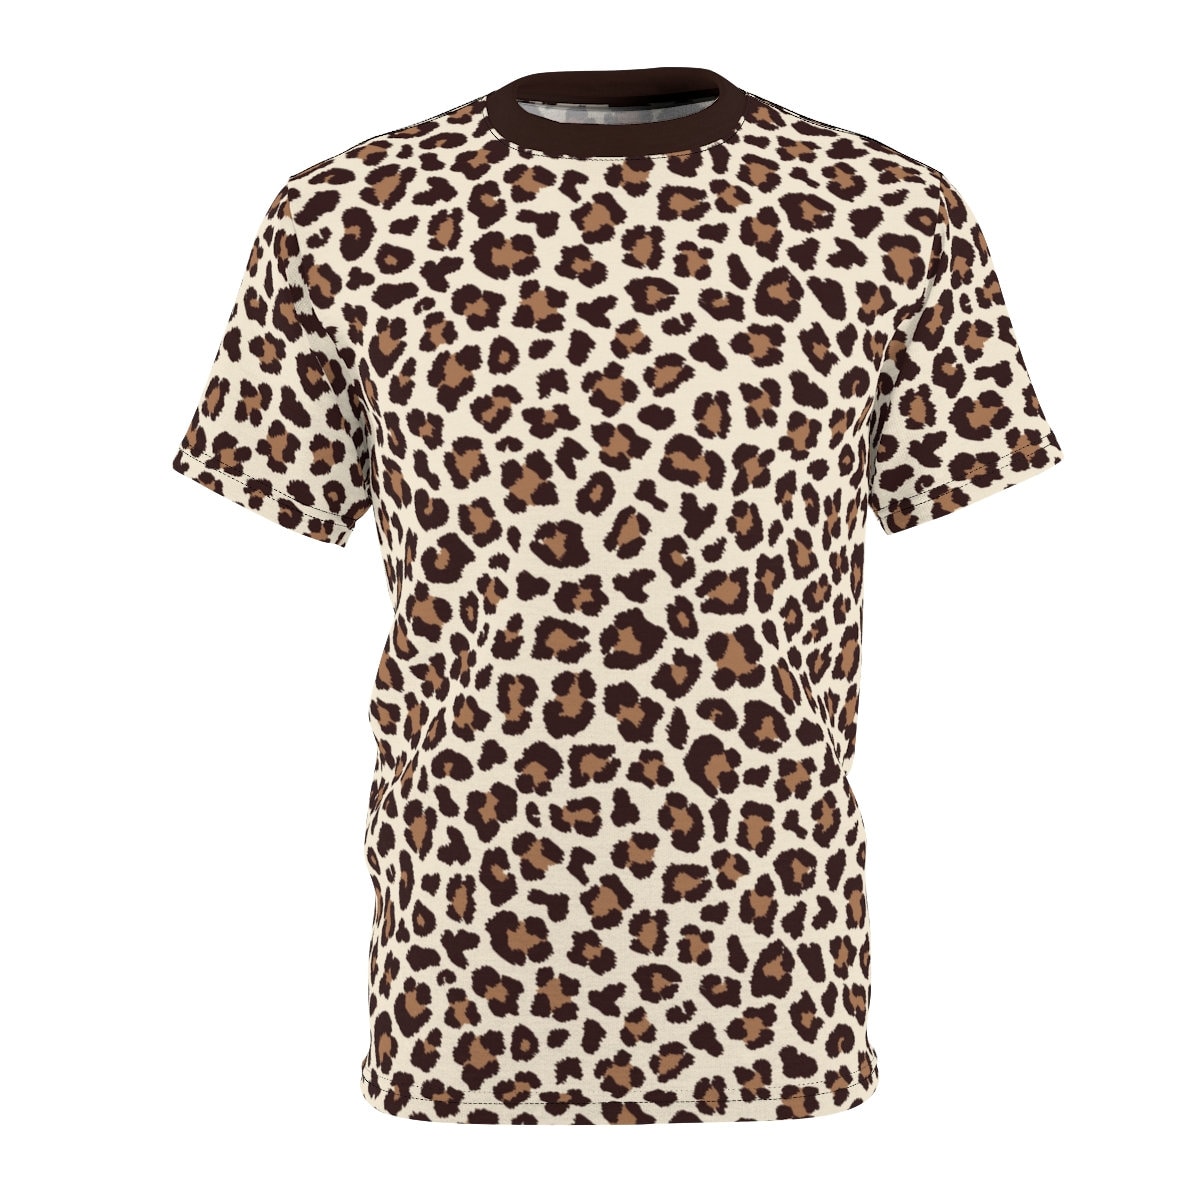 Leopard T-shirt Animal Print T-shirt Brown Beige Tan T-shirt Men's